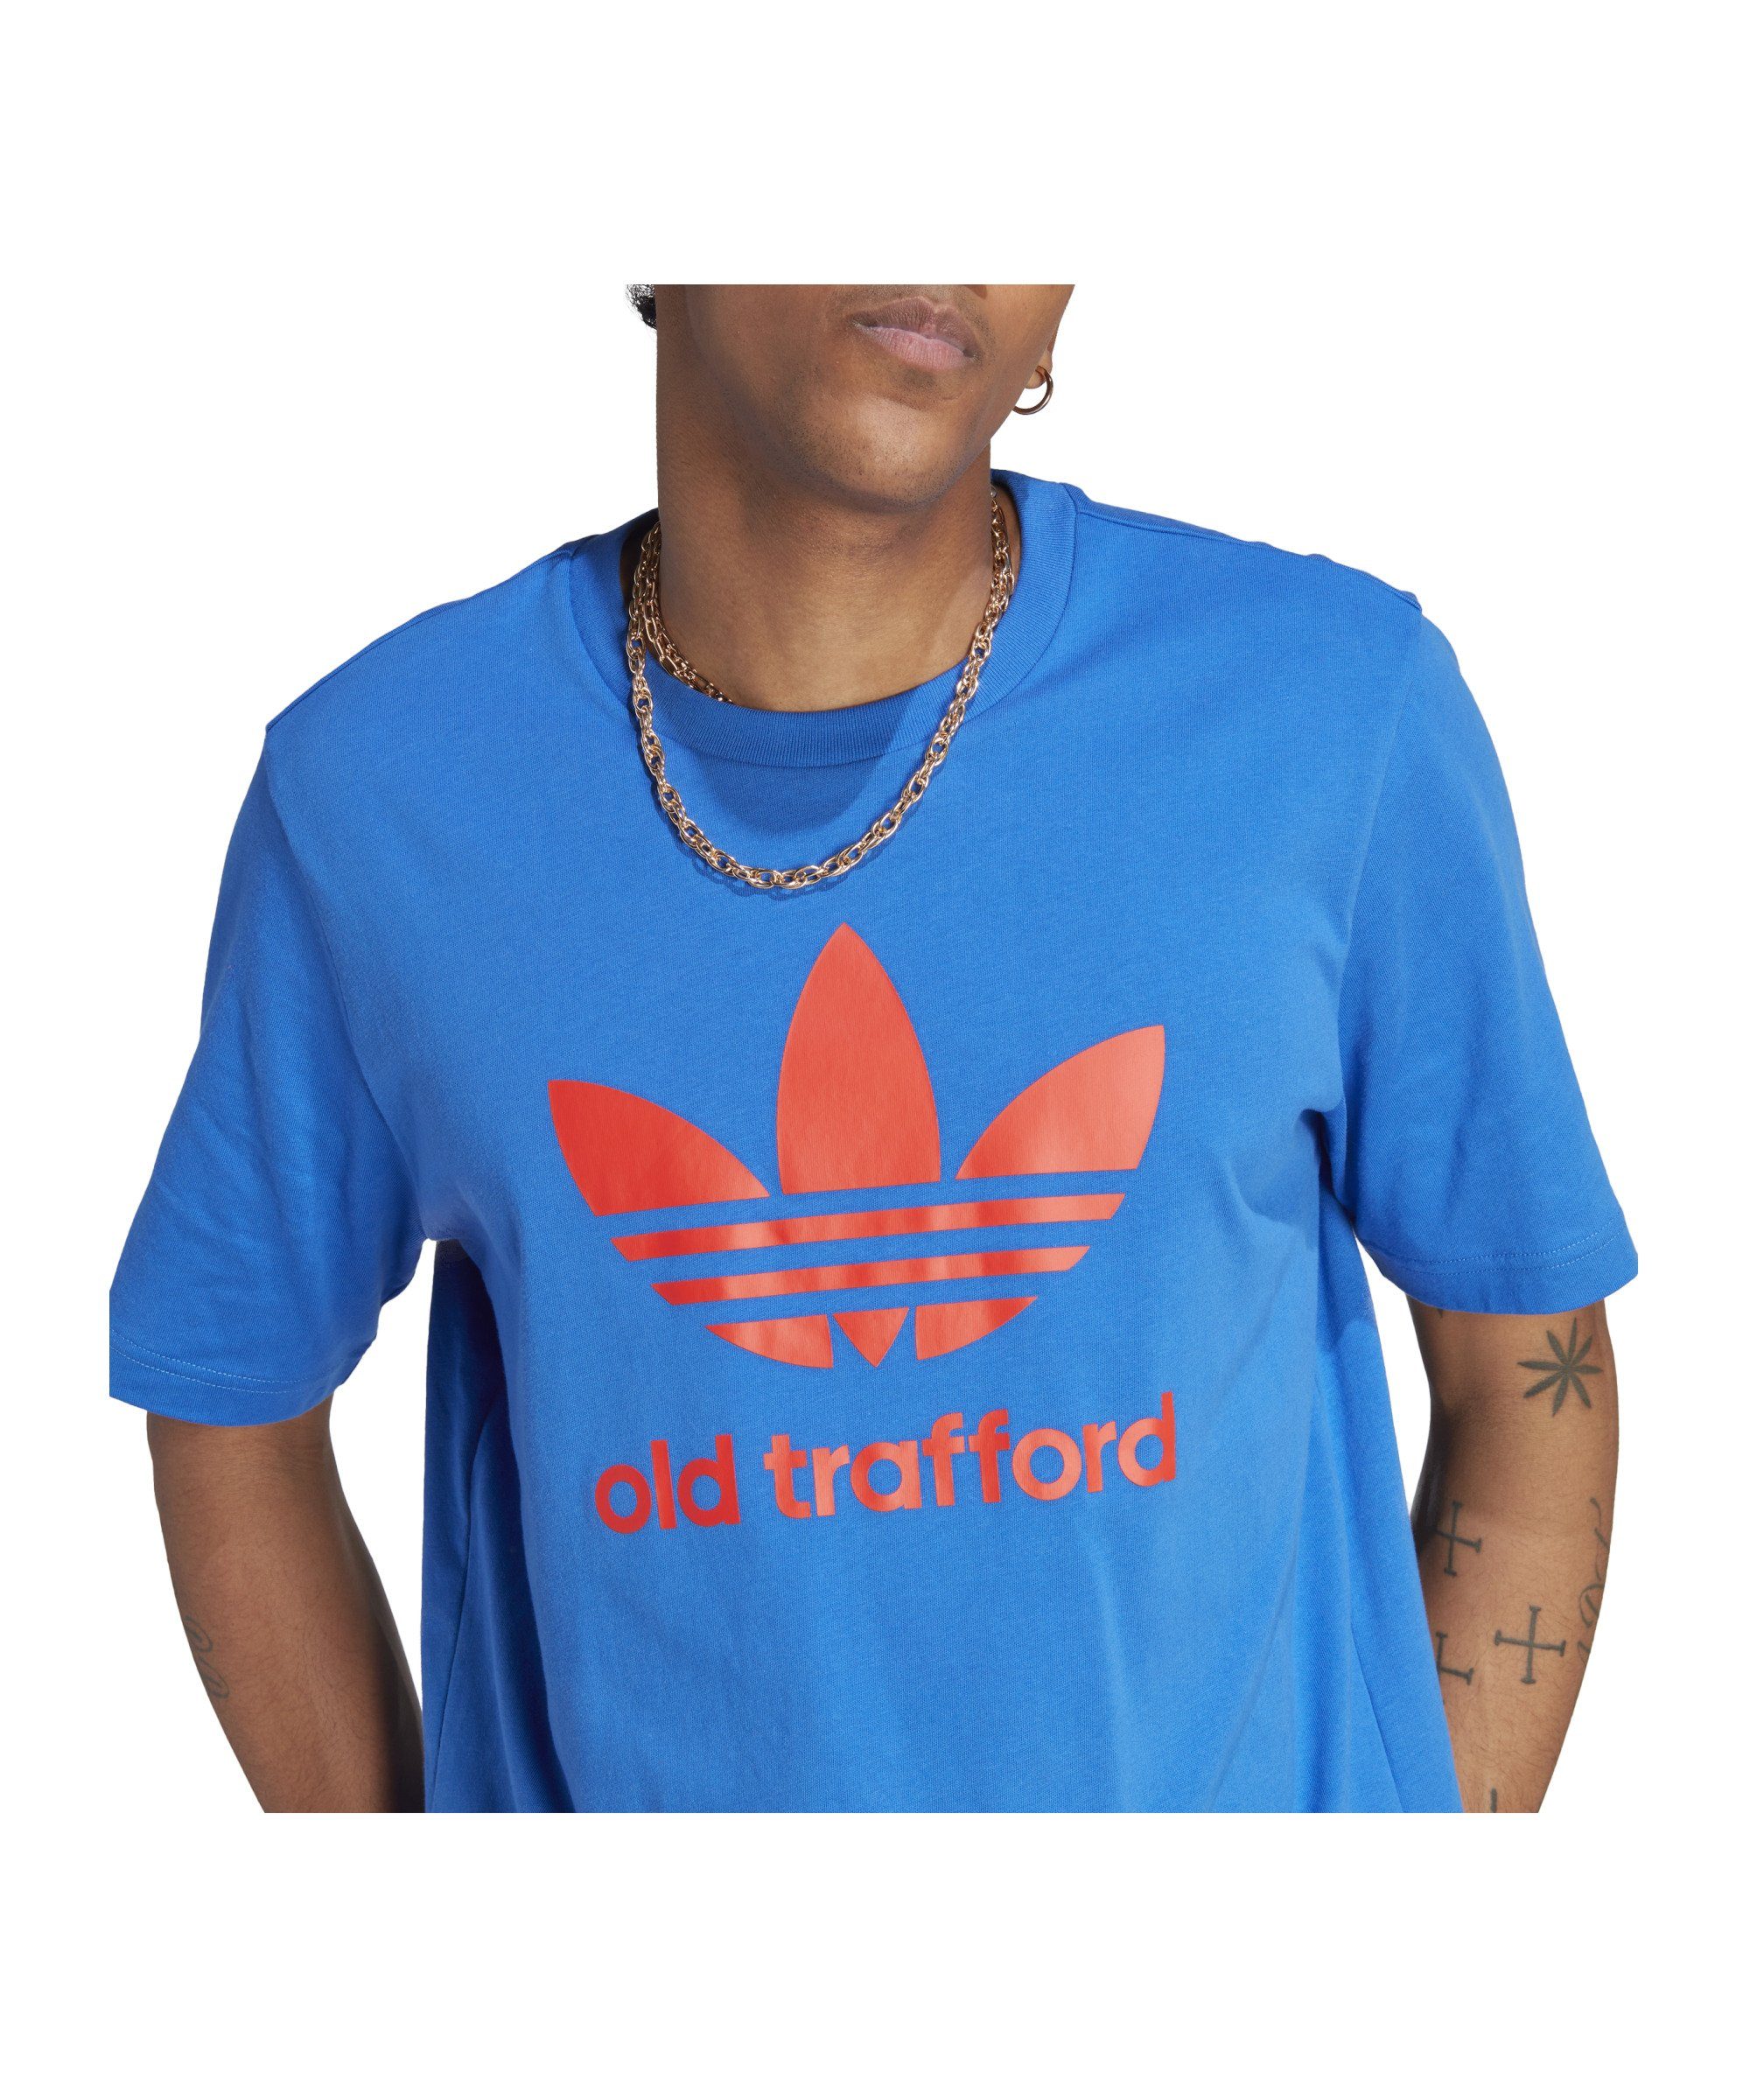 Manchester adidas T-Shirt United default blau Originals T-Shirt